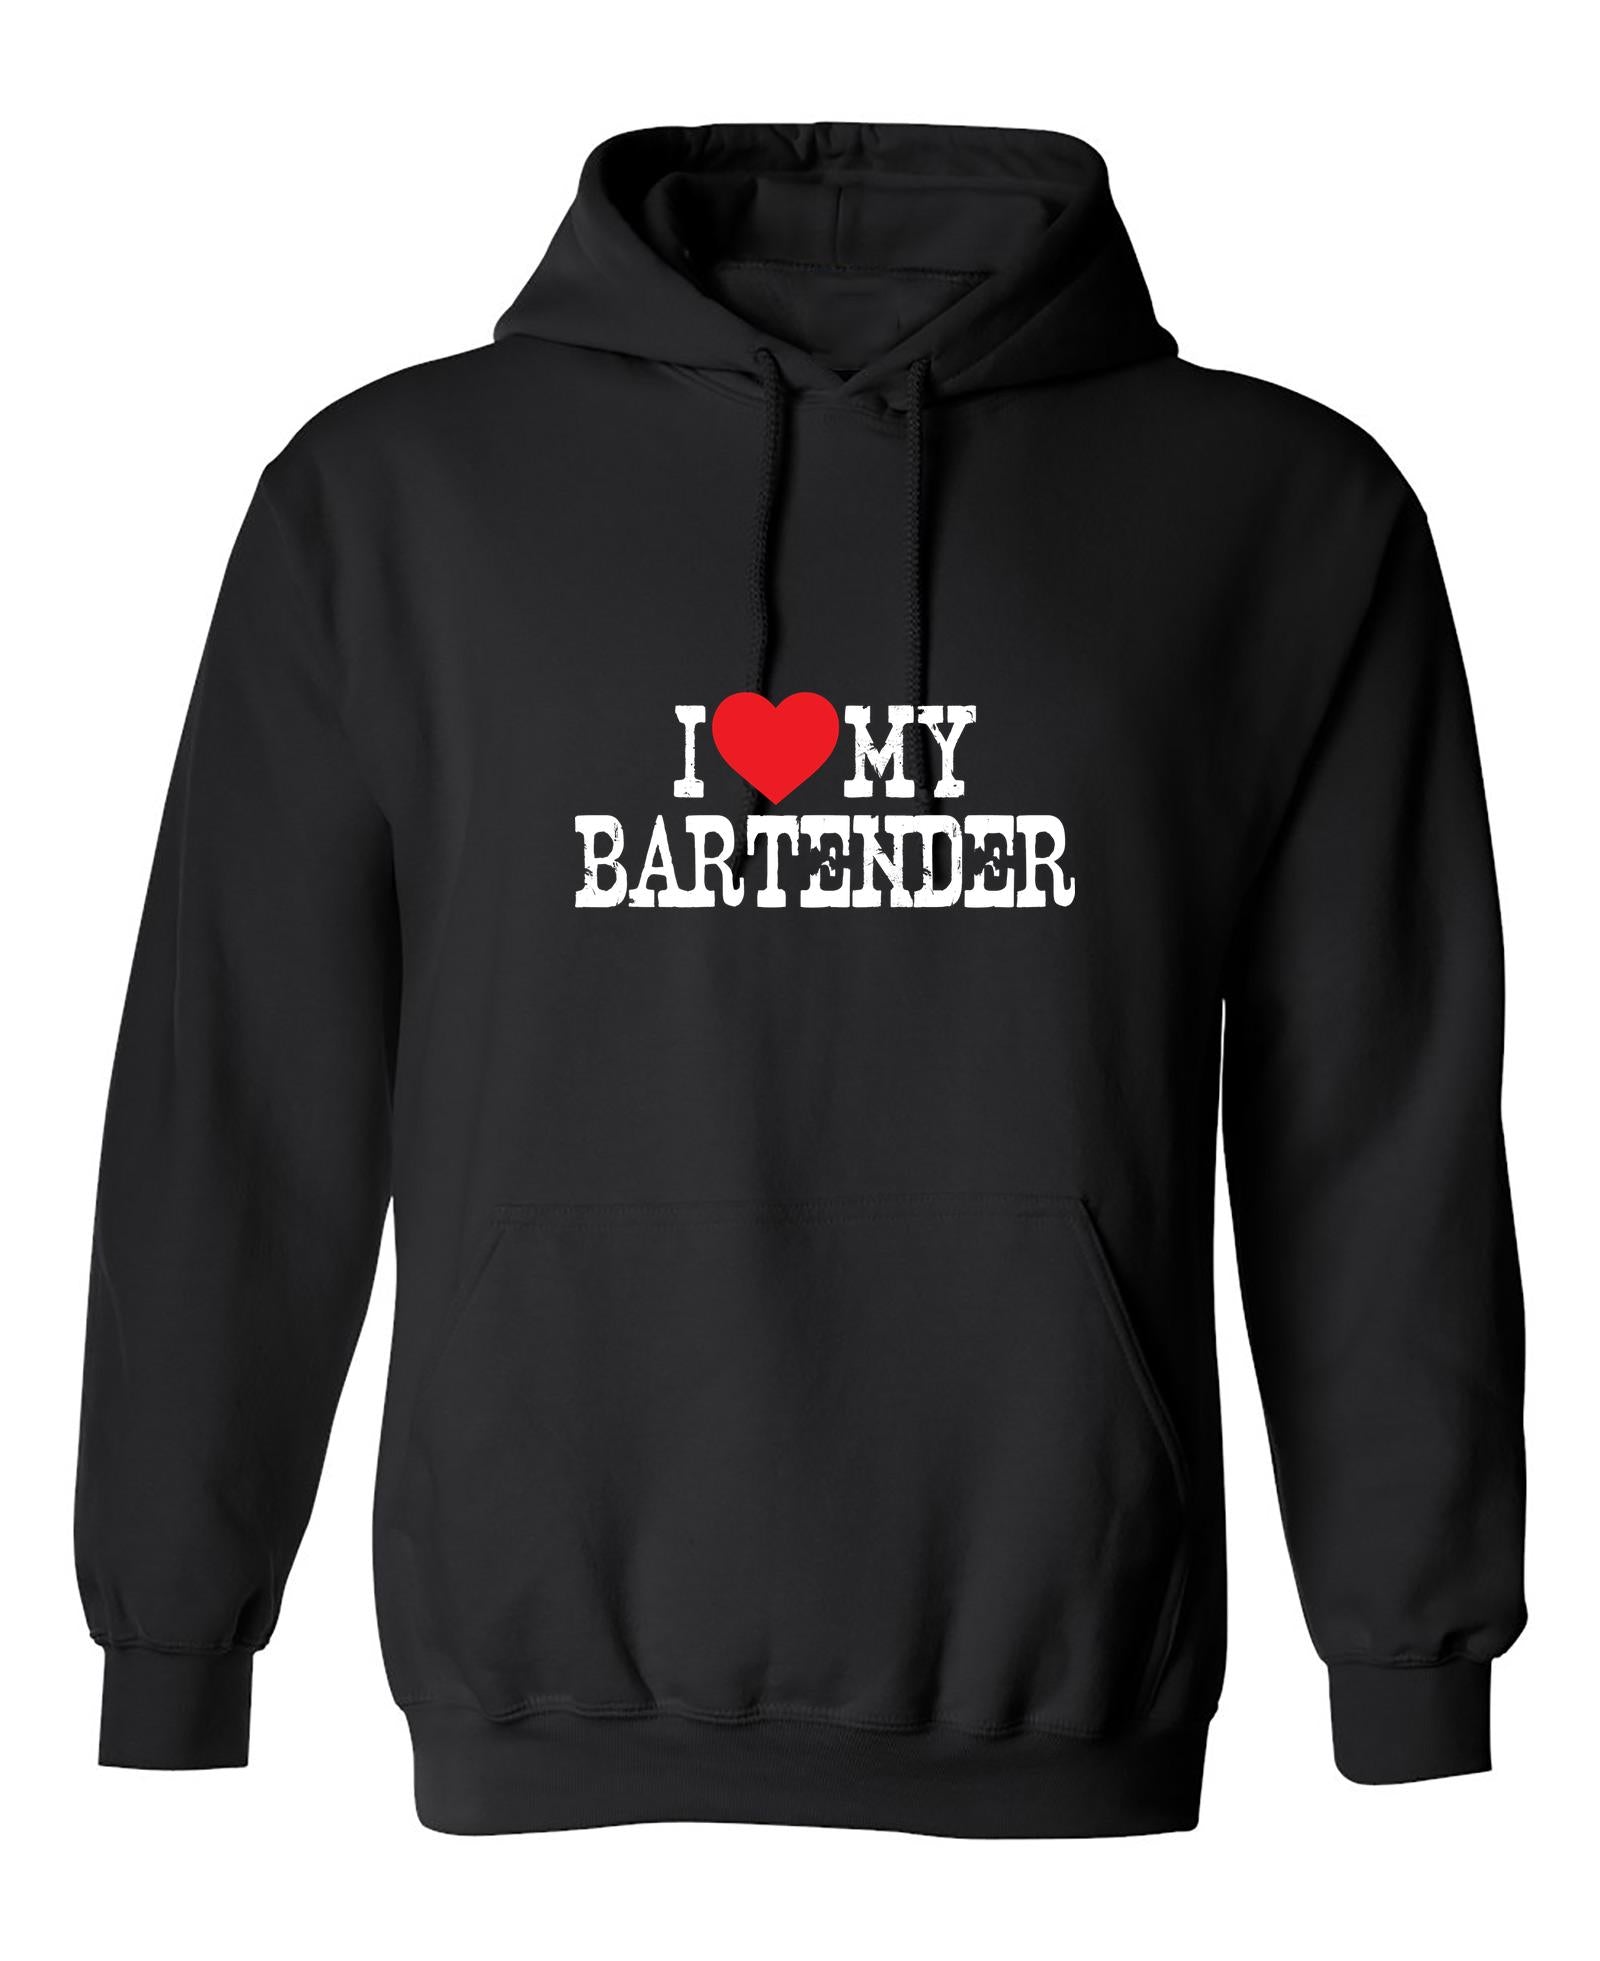 Funny T-Shirts design "I Love My Bartender"